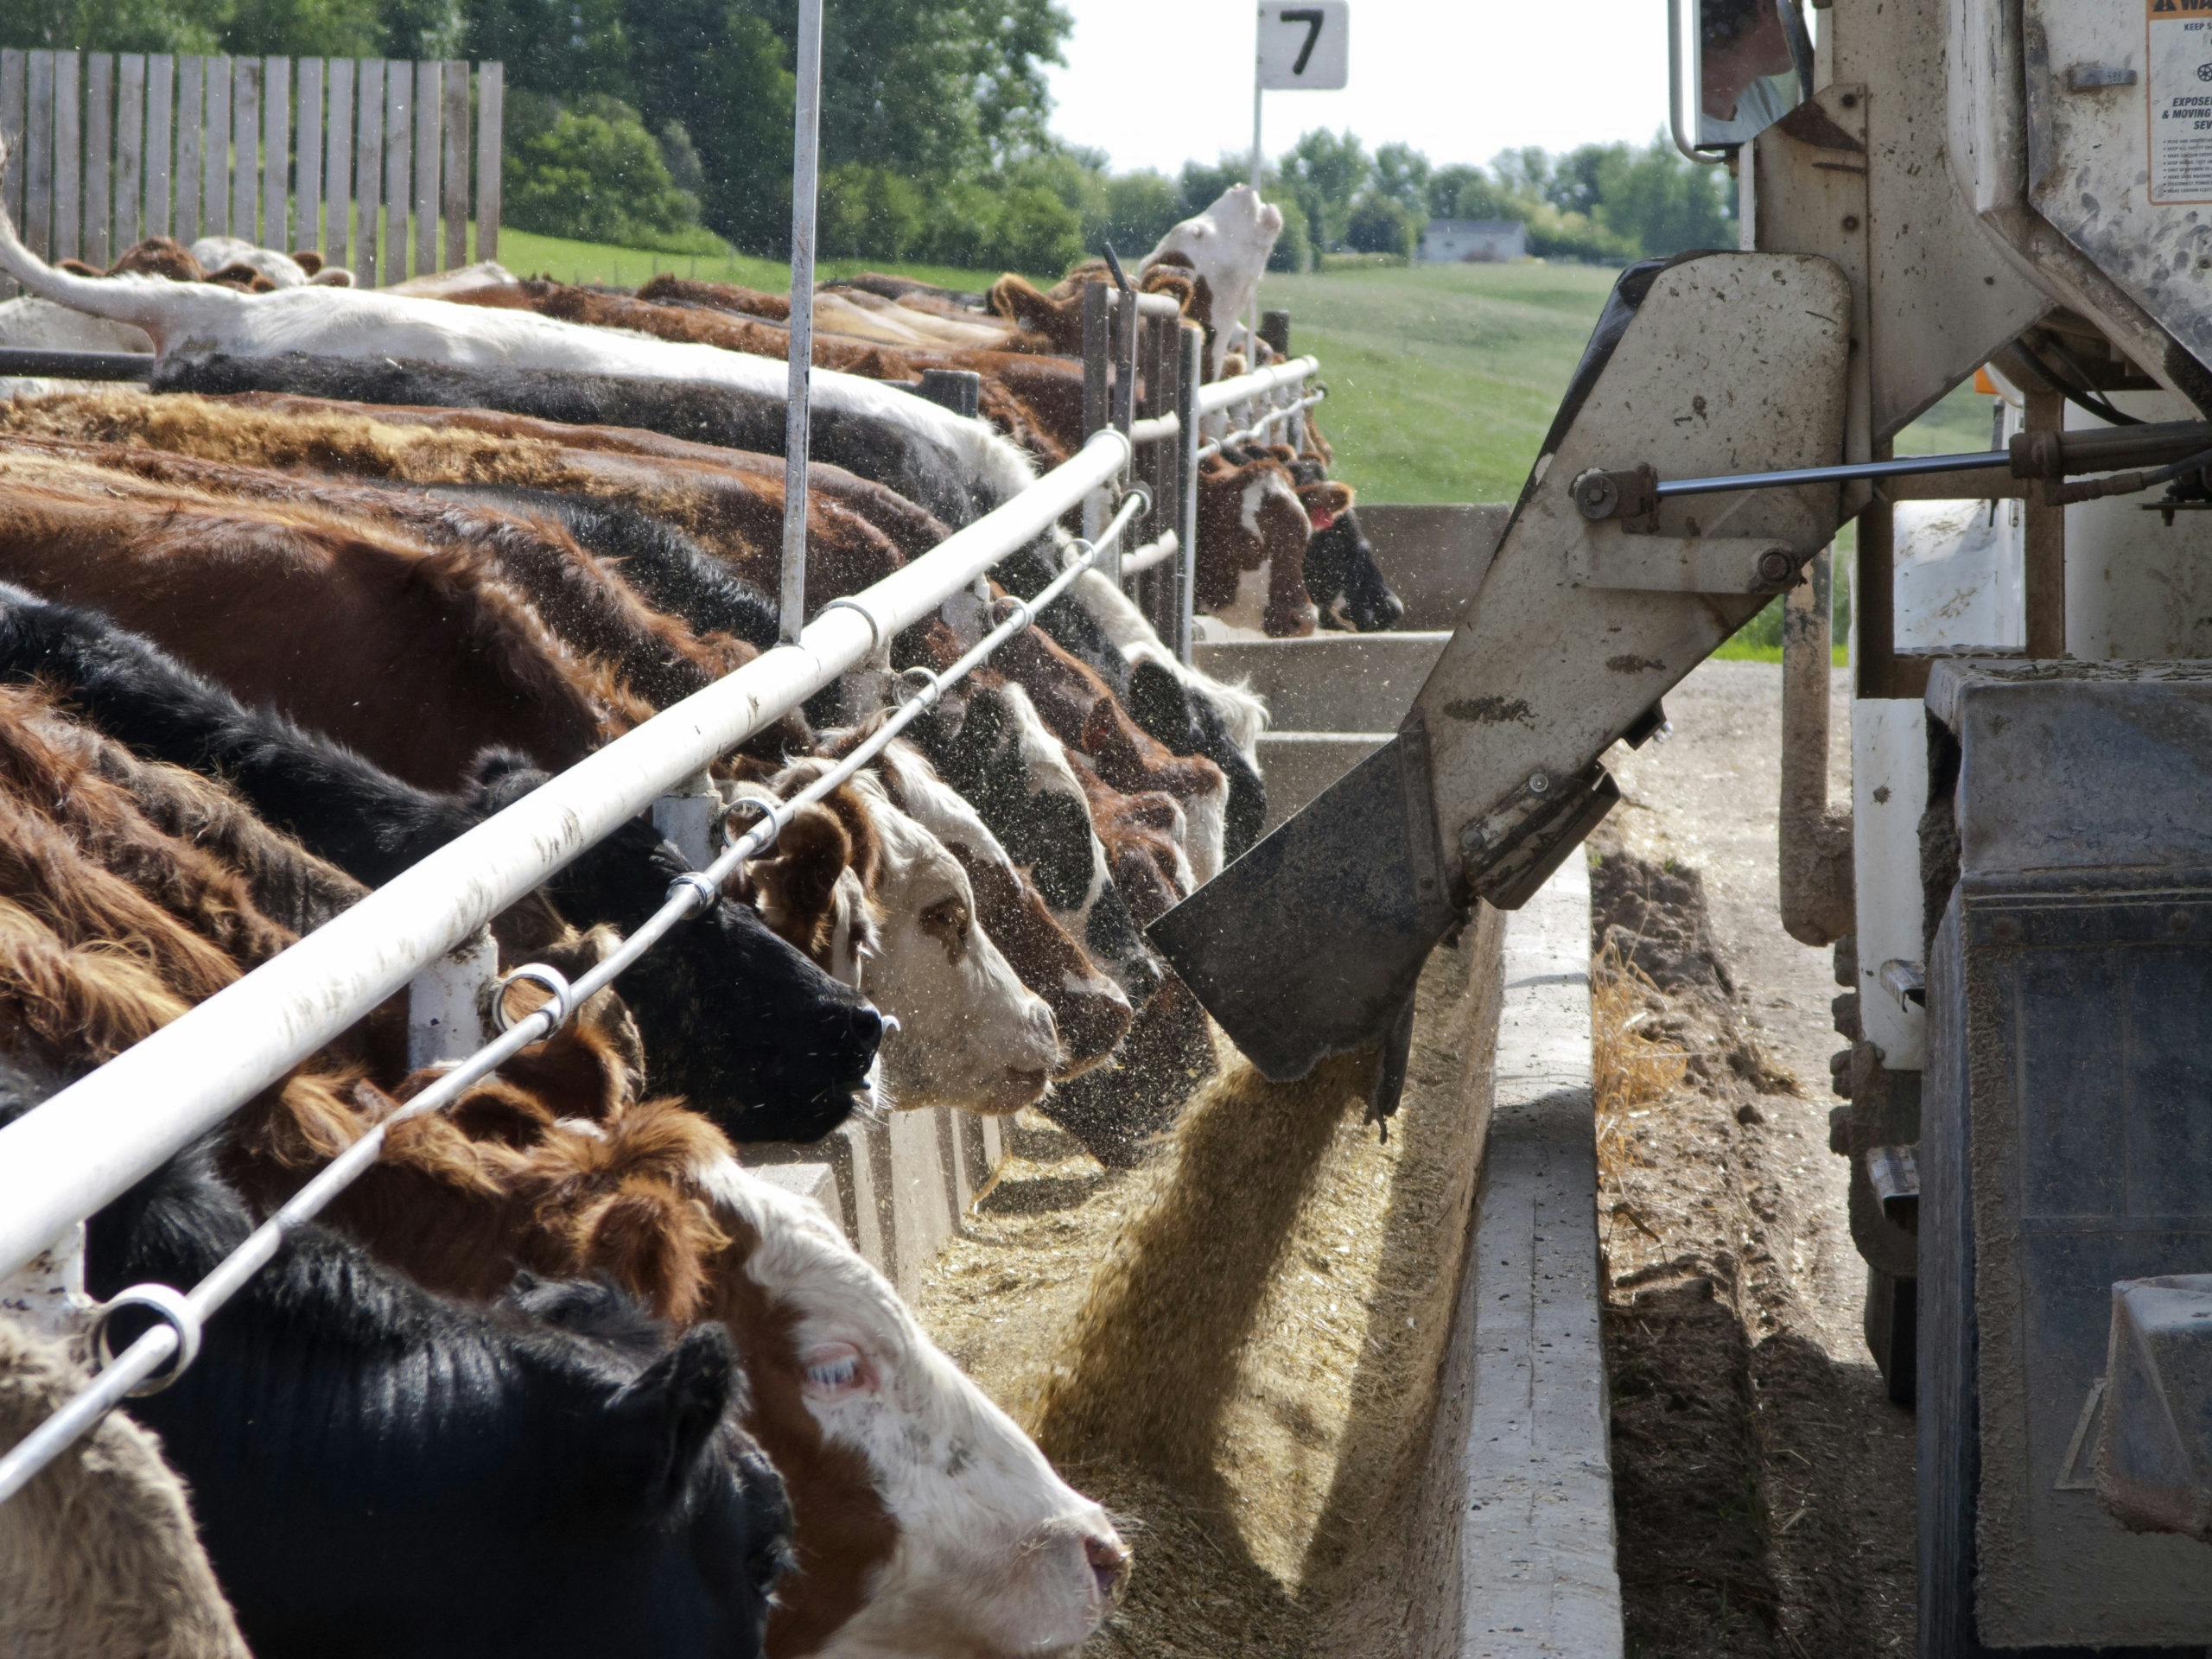 cows at feeding trough